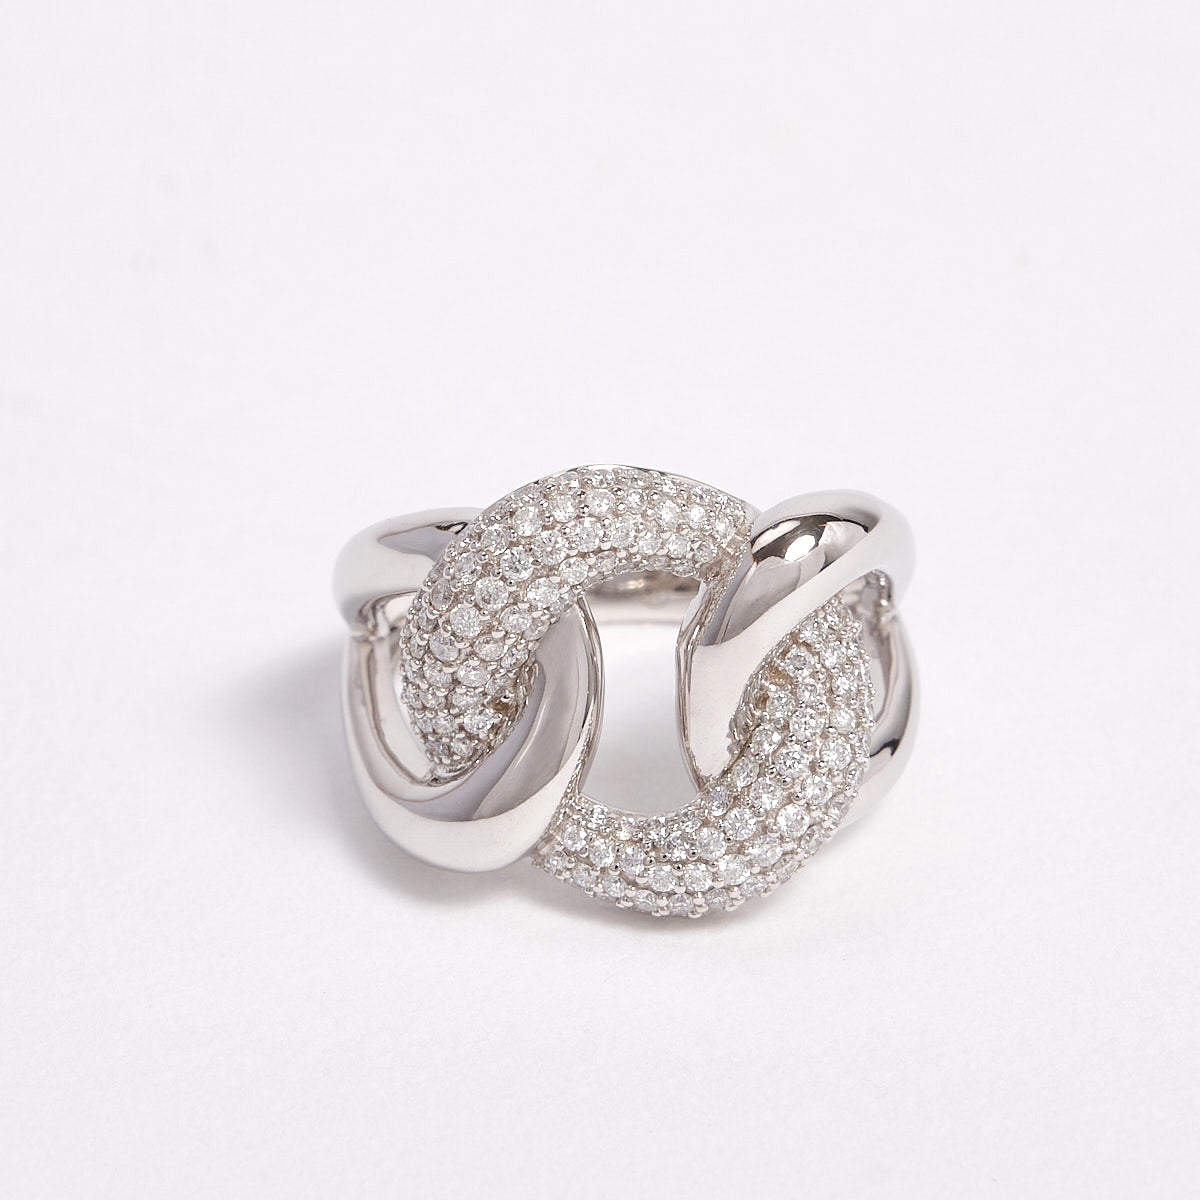 Brook 9ct White Gold & Diamond Bespoke Ring